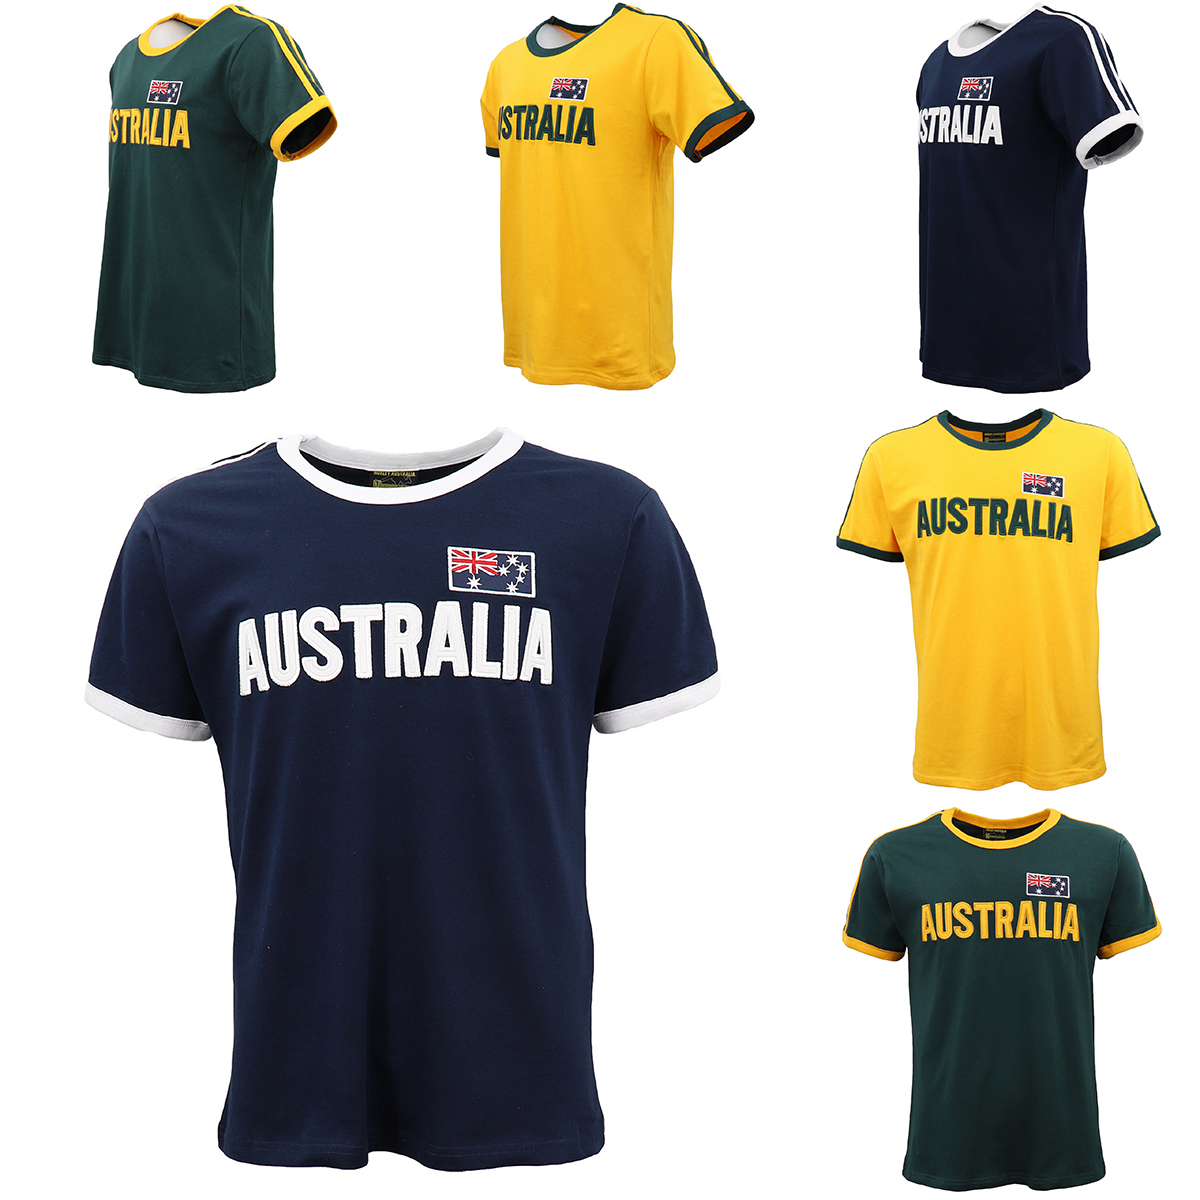 New 2-14 Years 100% Cotton Kids T-Shirt Australia Day Flag Stripes Tee Tops Gift